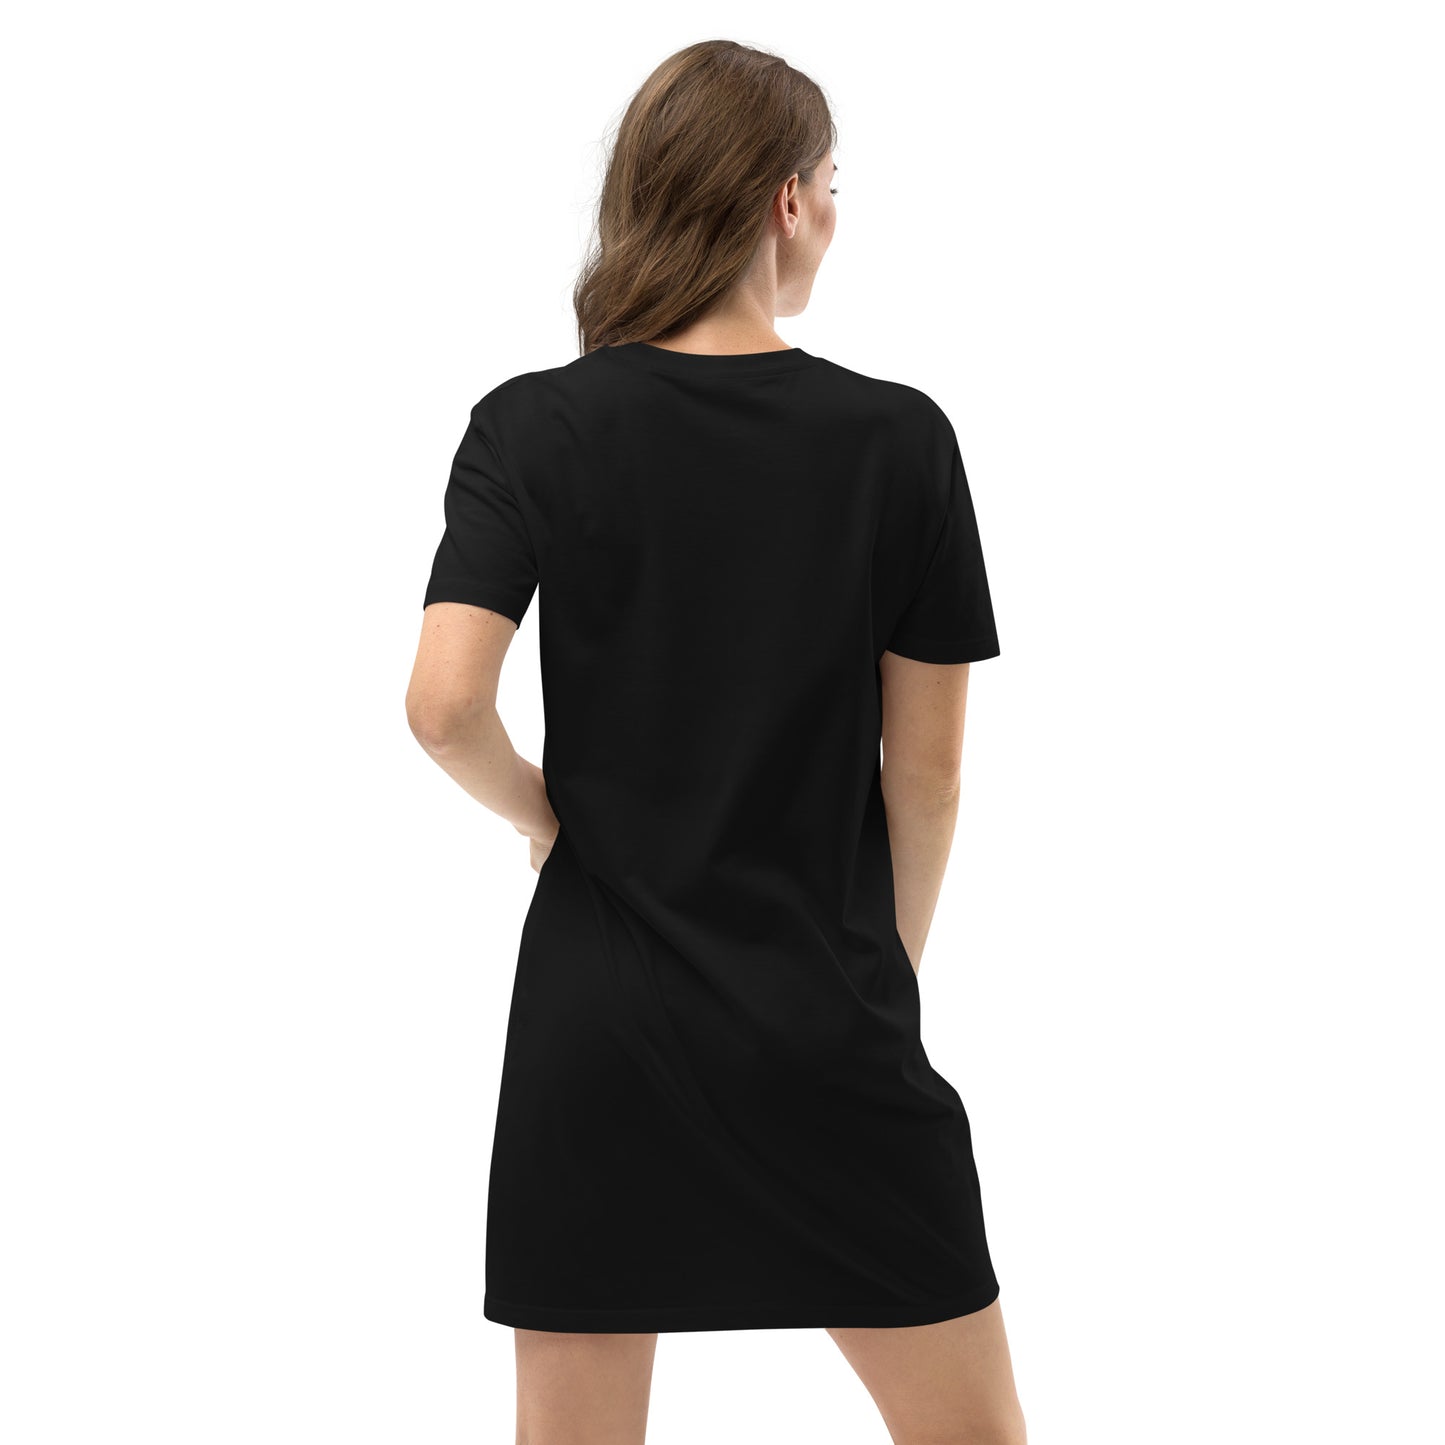 Live Simply Women's 100% Organic Cotton T-Shirt Dress Loungewear